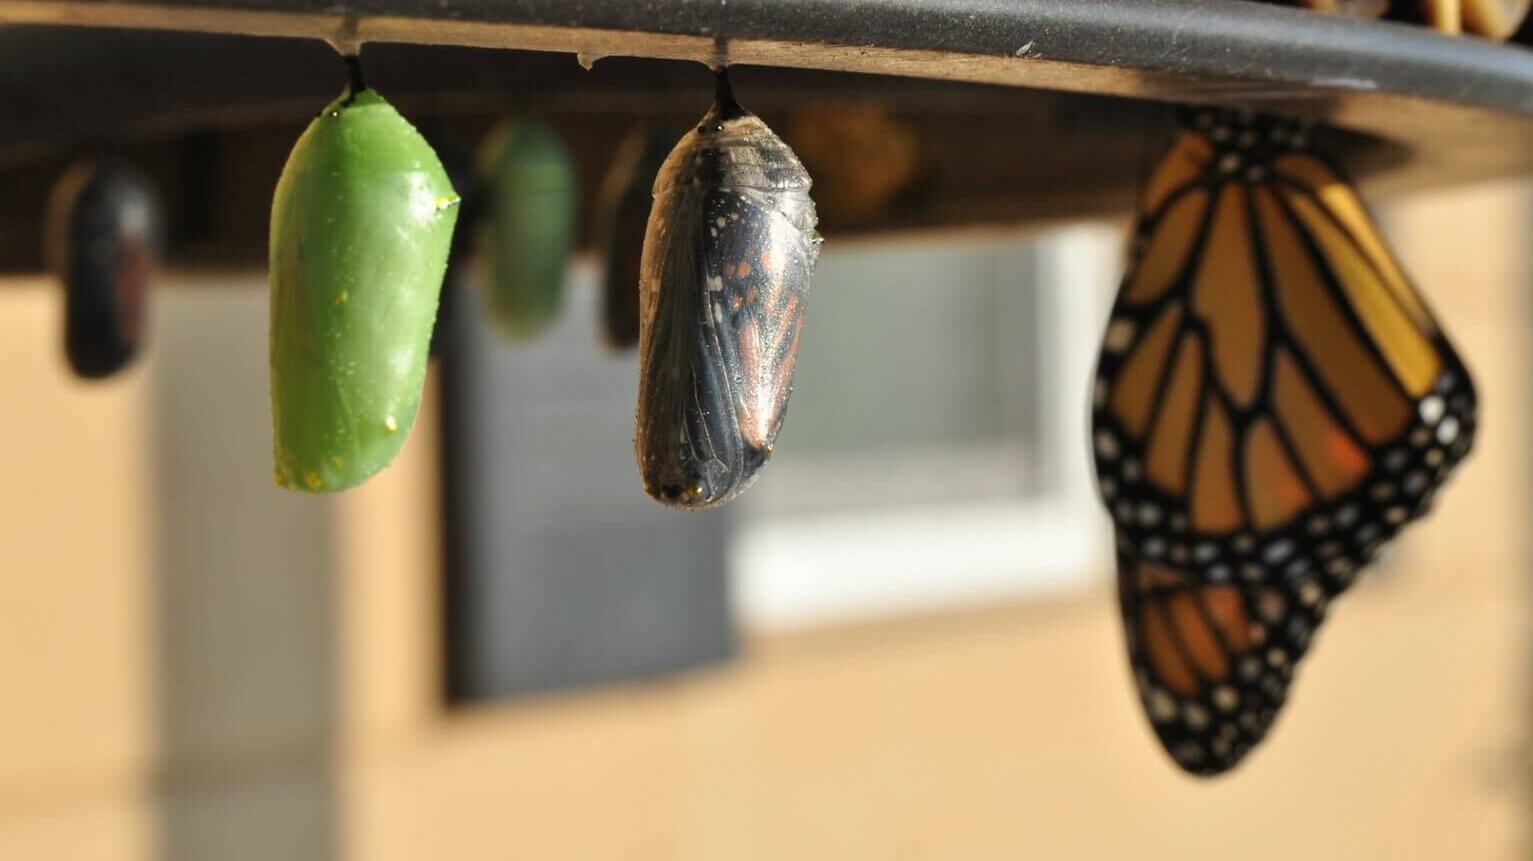 3 pupas (chrysalis) & a monarch butterfly